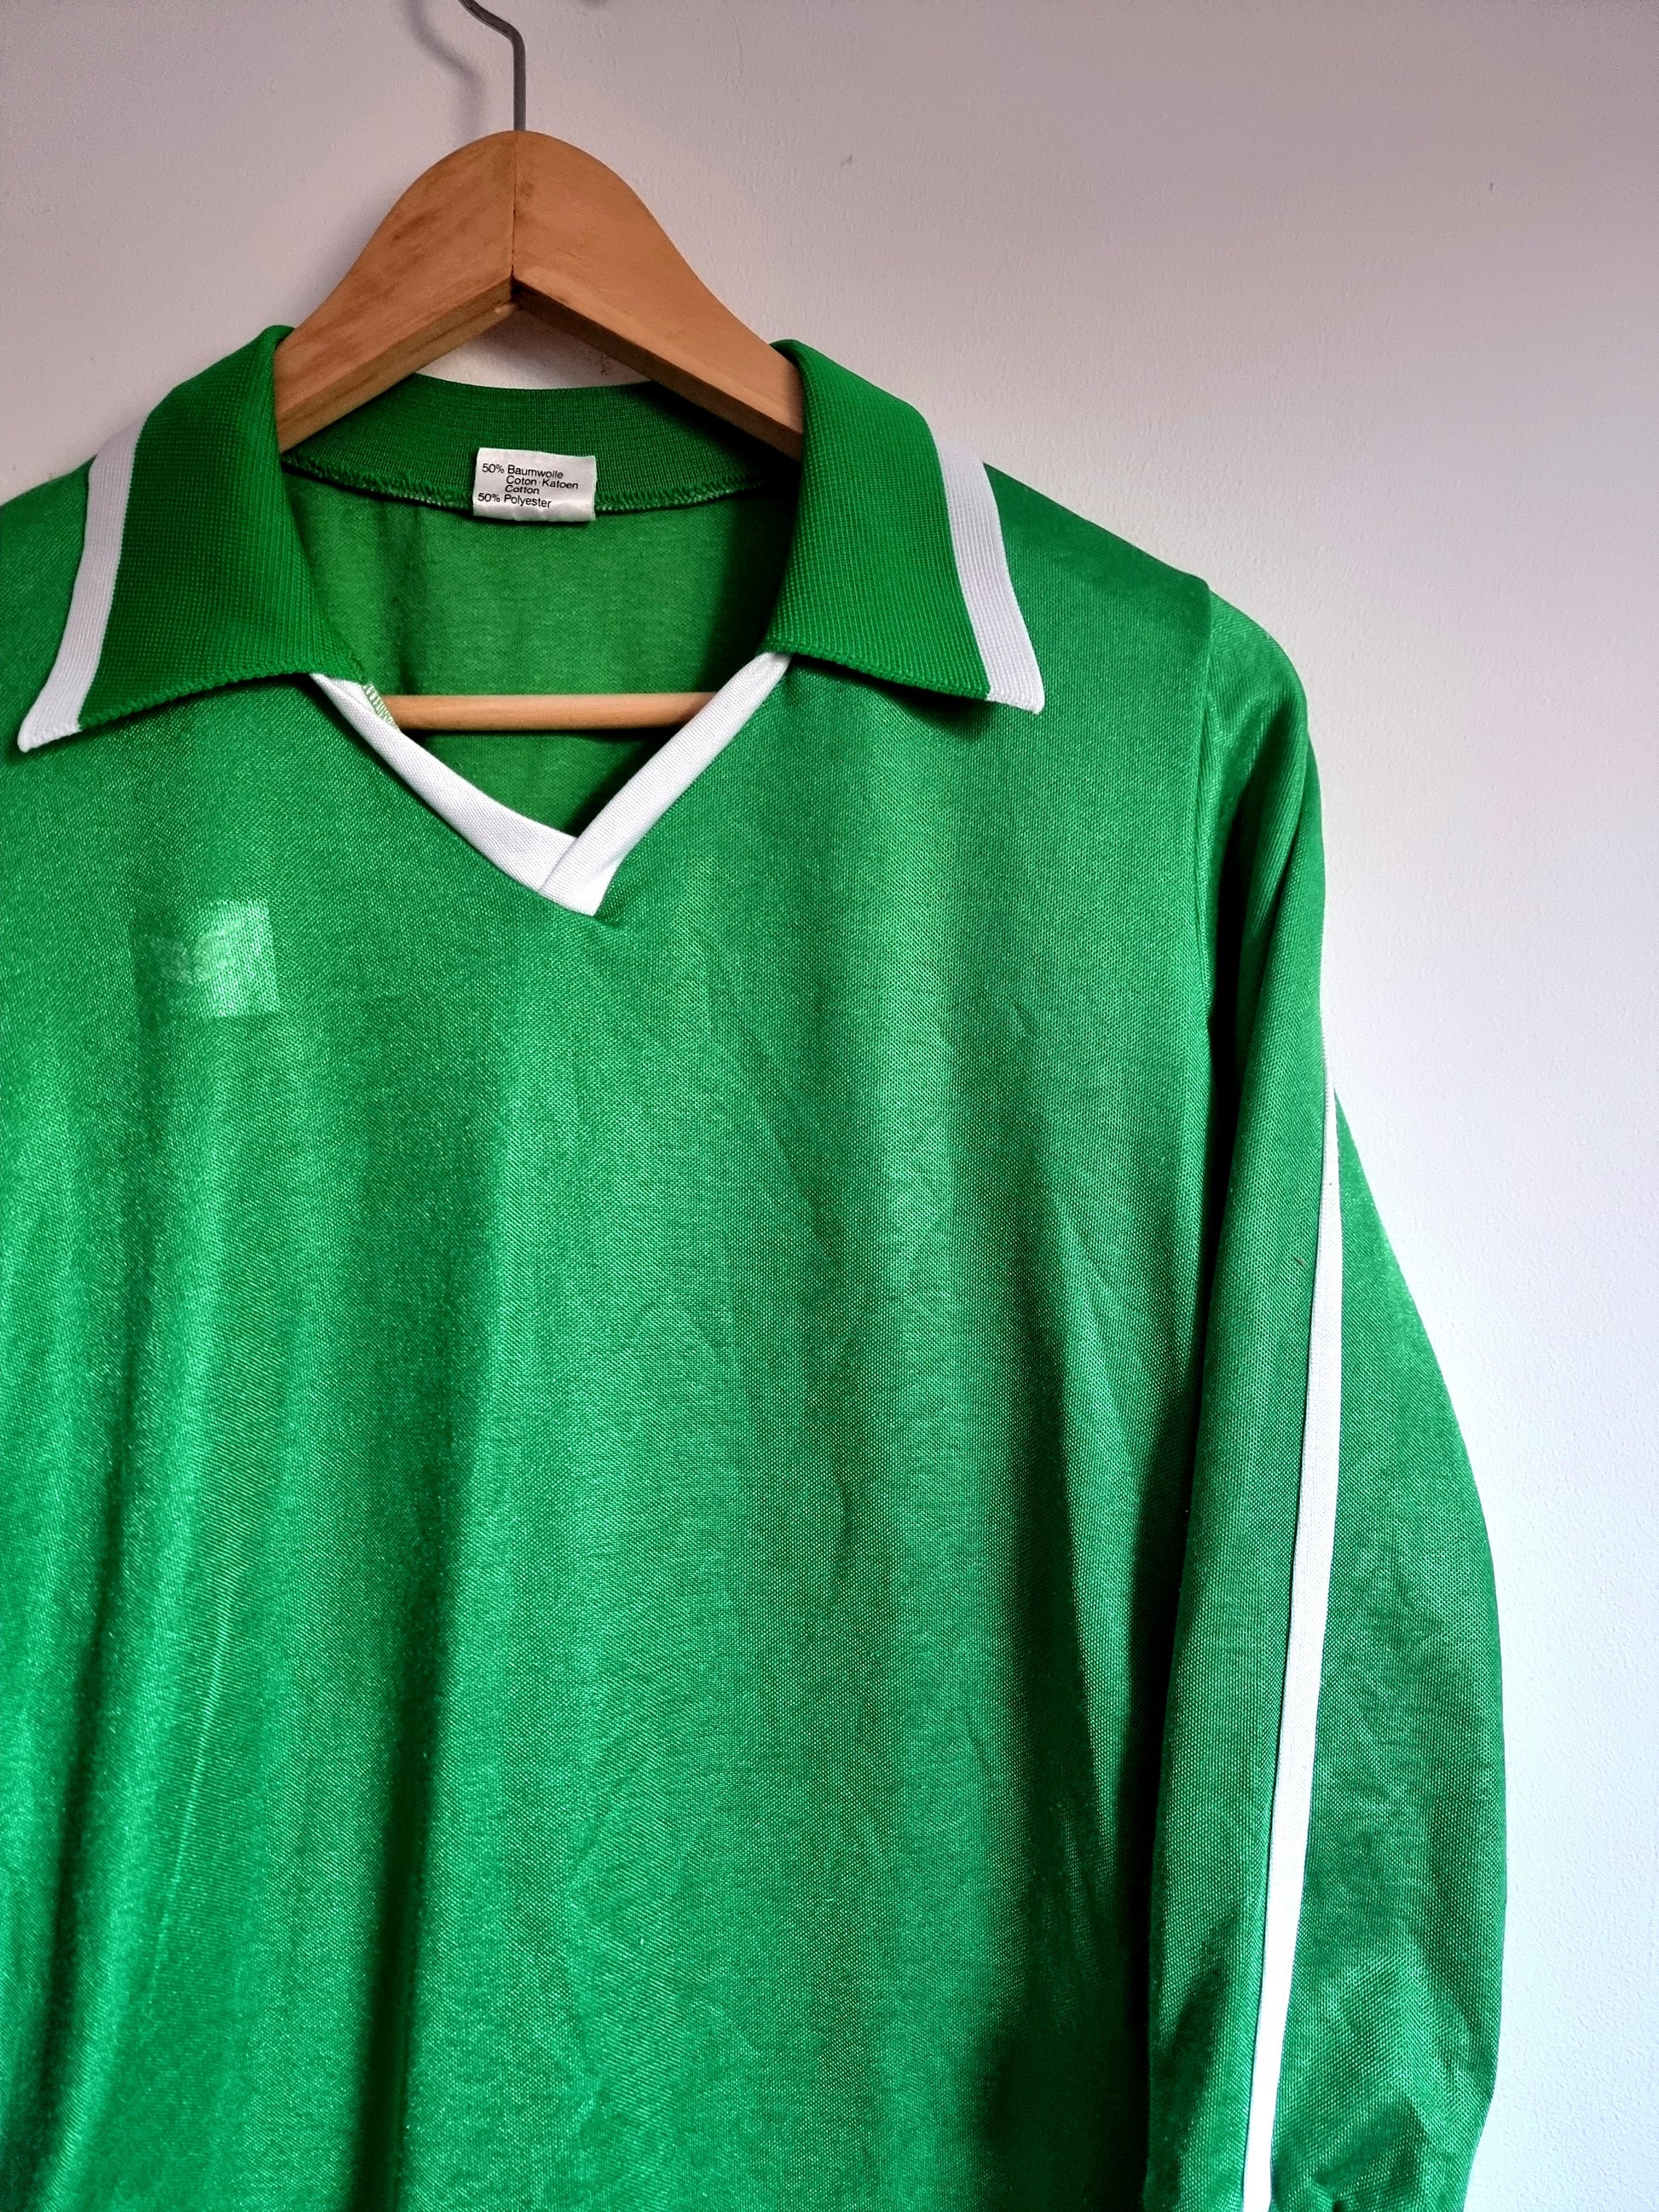 Staren vrek Arena Erima Vintage 70s Long Sleeve Template Football Shirt Small – Granny's  Football Store